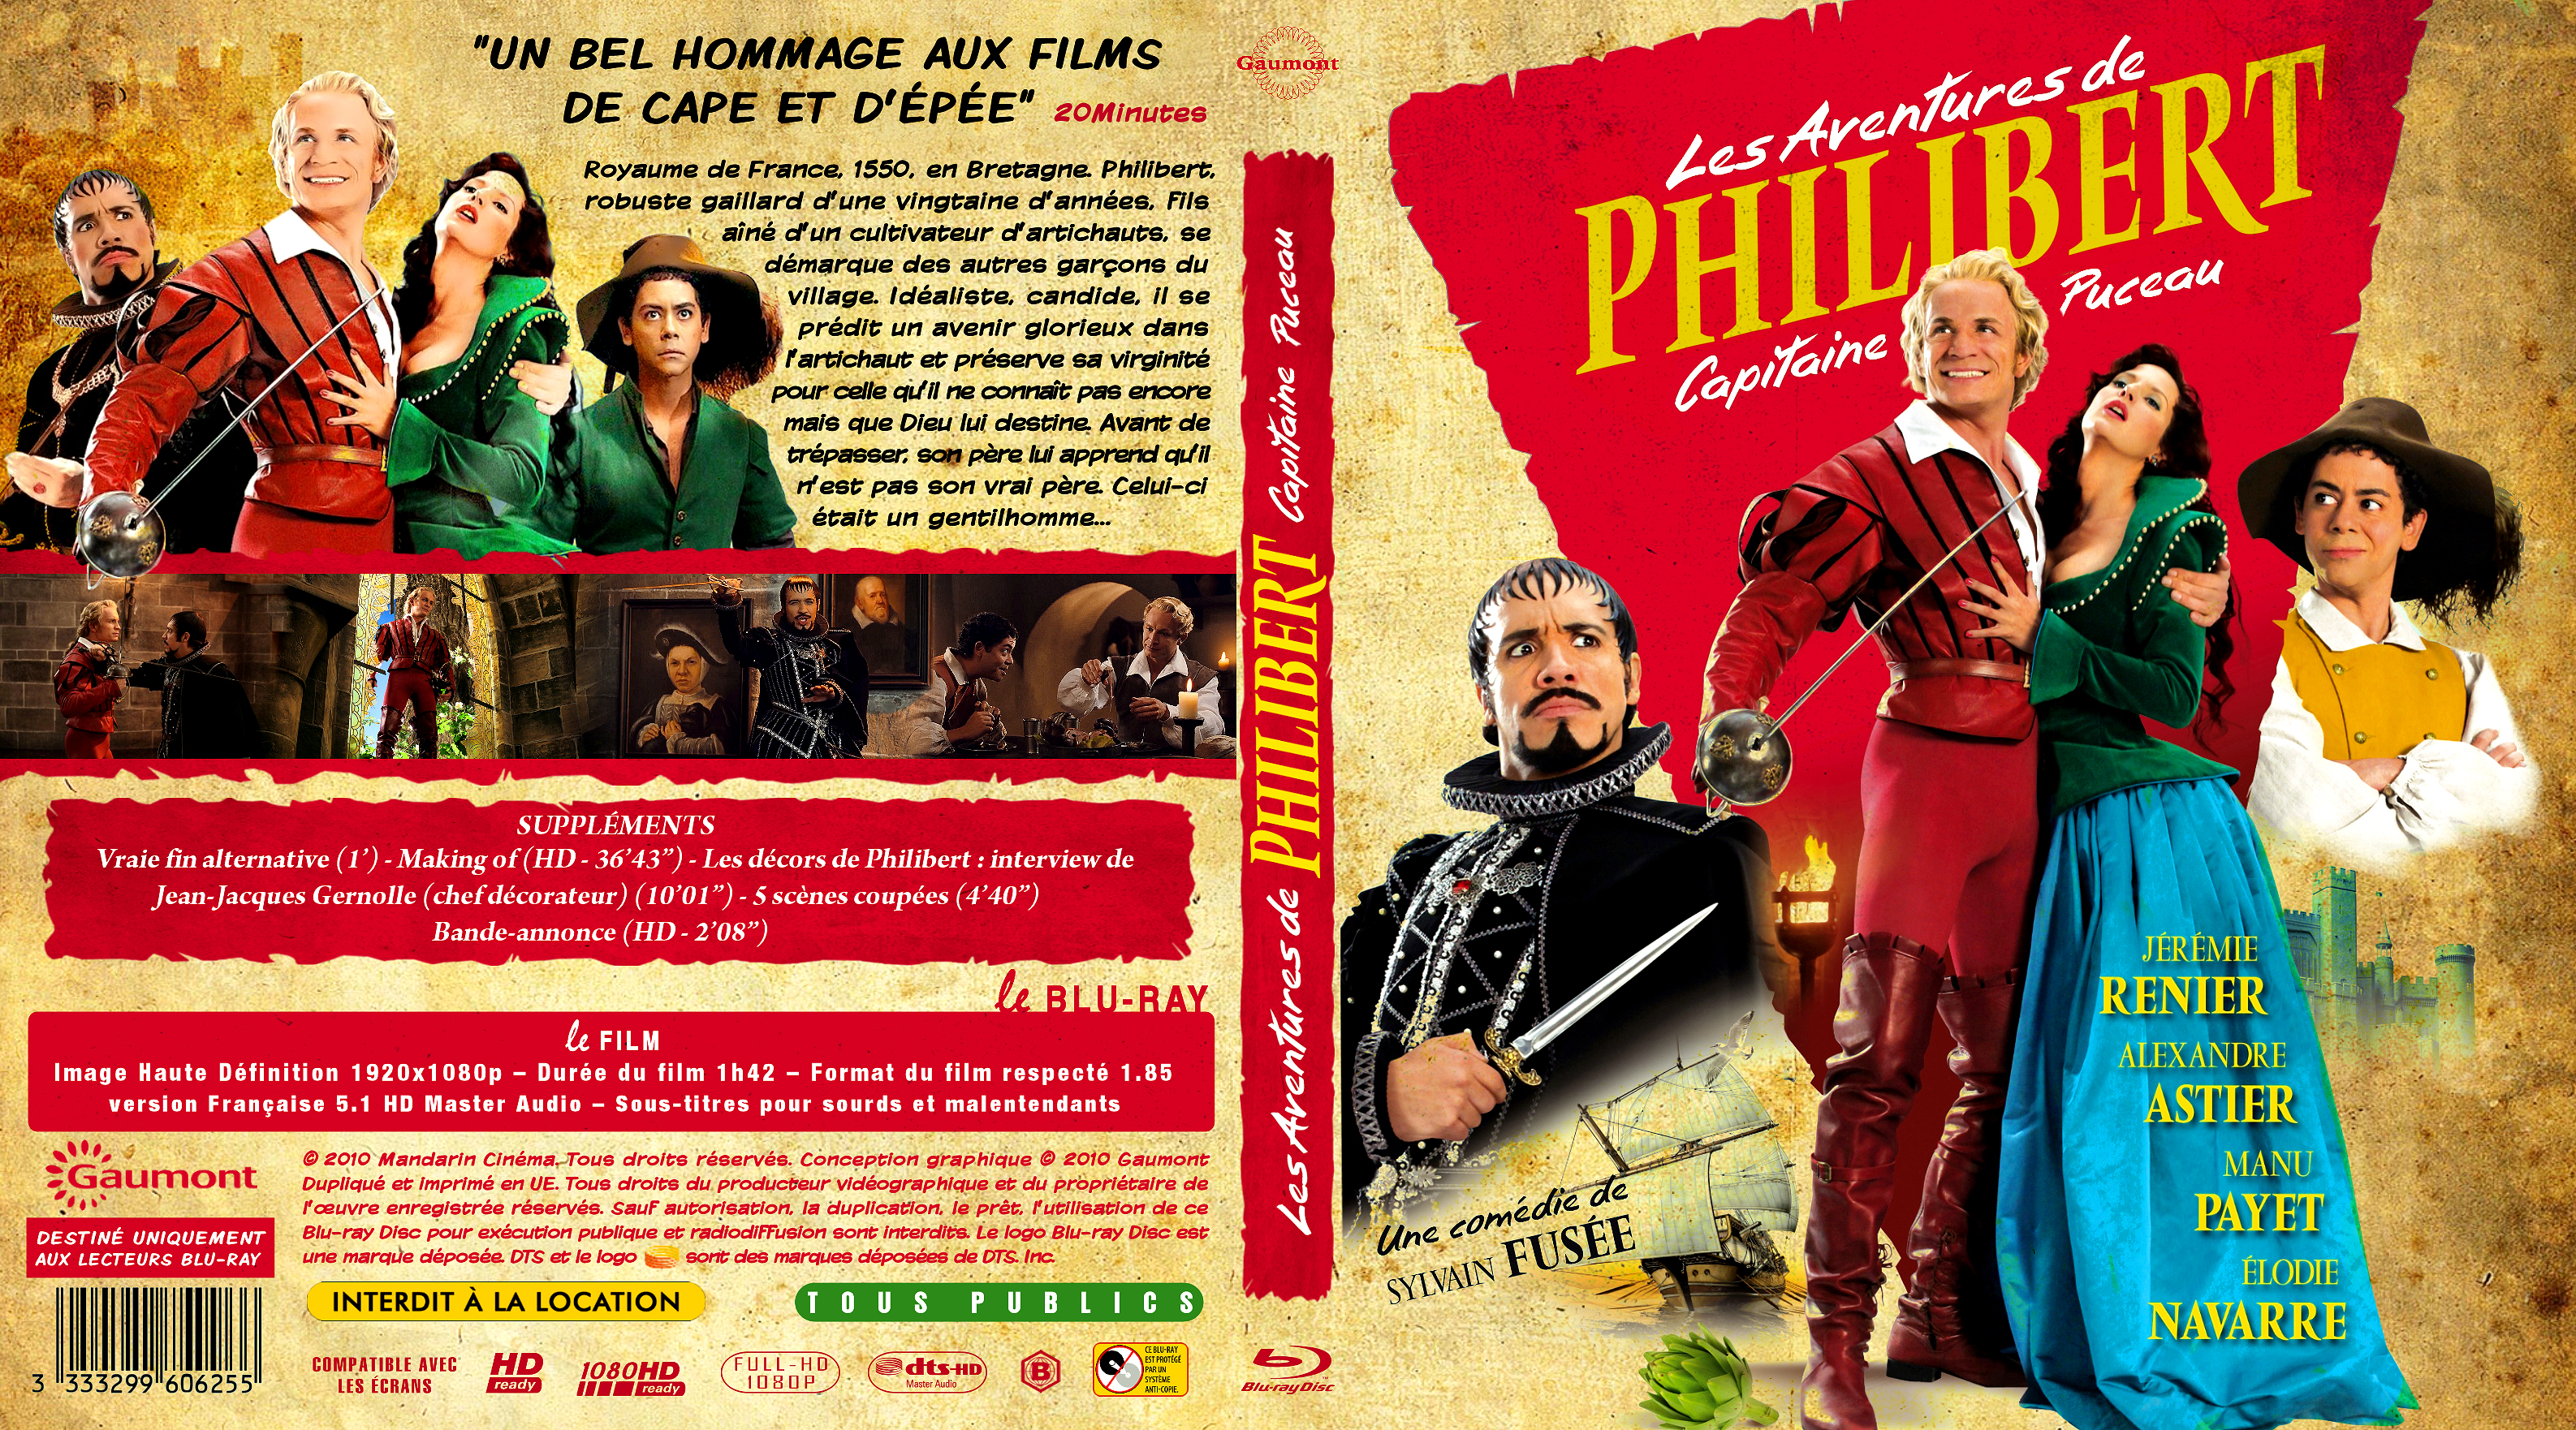 Jaquette DVD Les aventures de Philibert capitaine puceau custom (BLU-RAY)